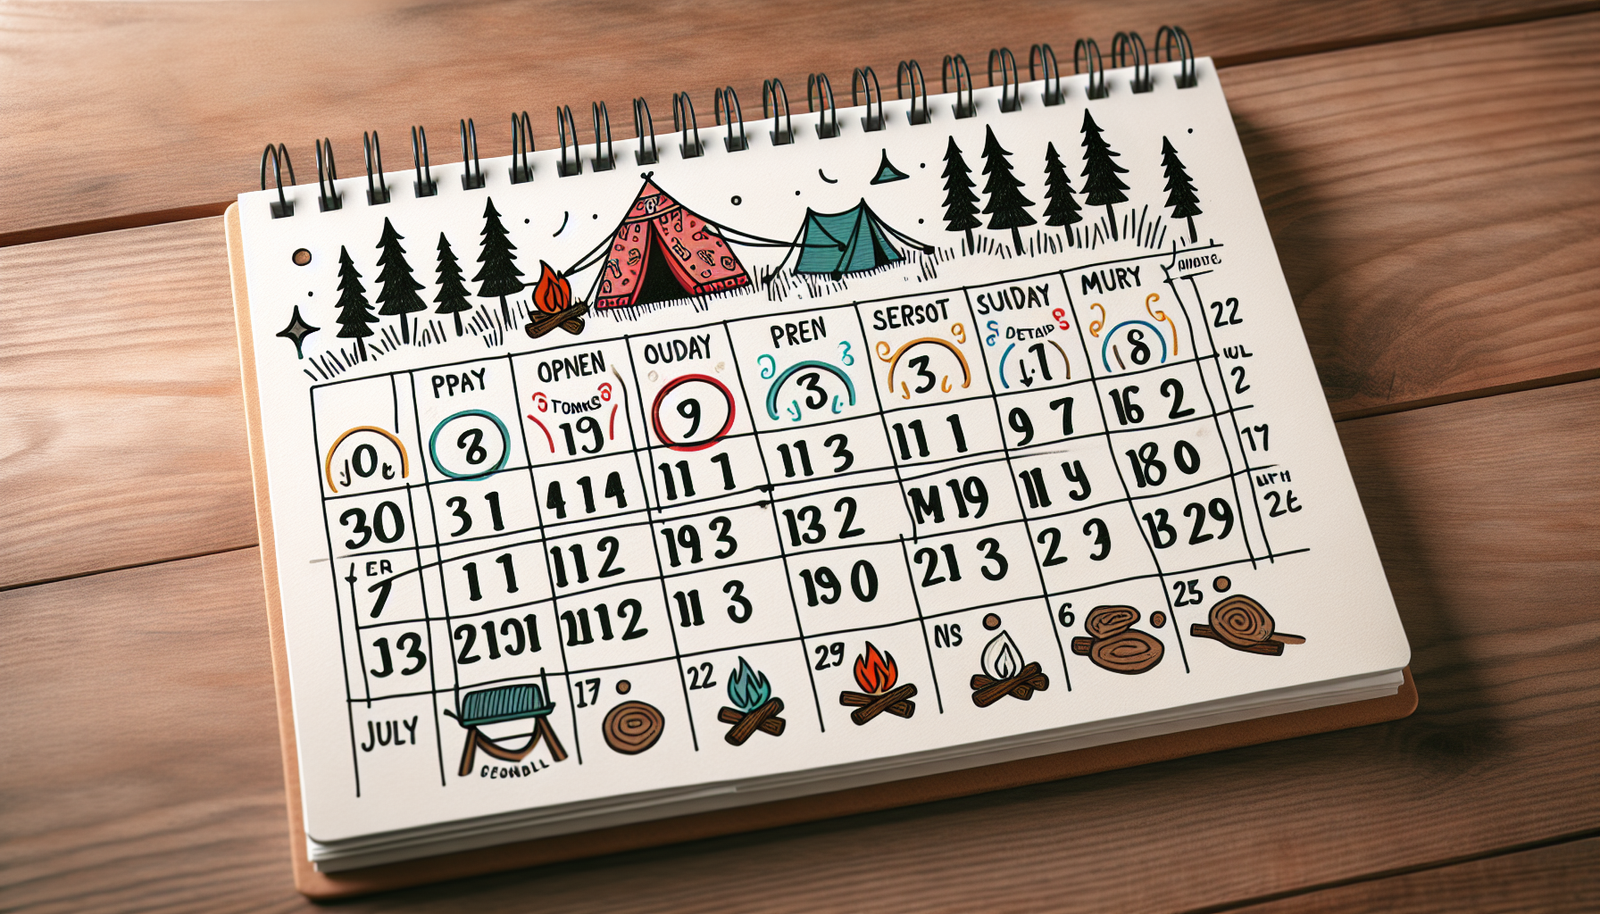 Key Dates for Camping Season